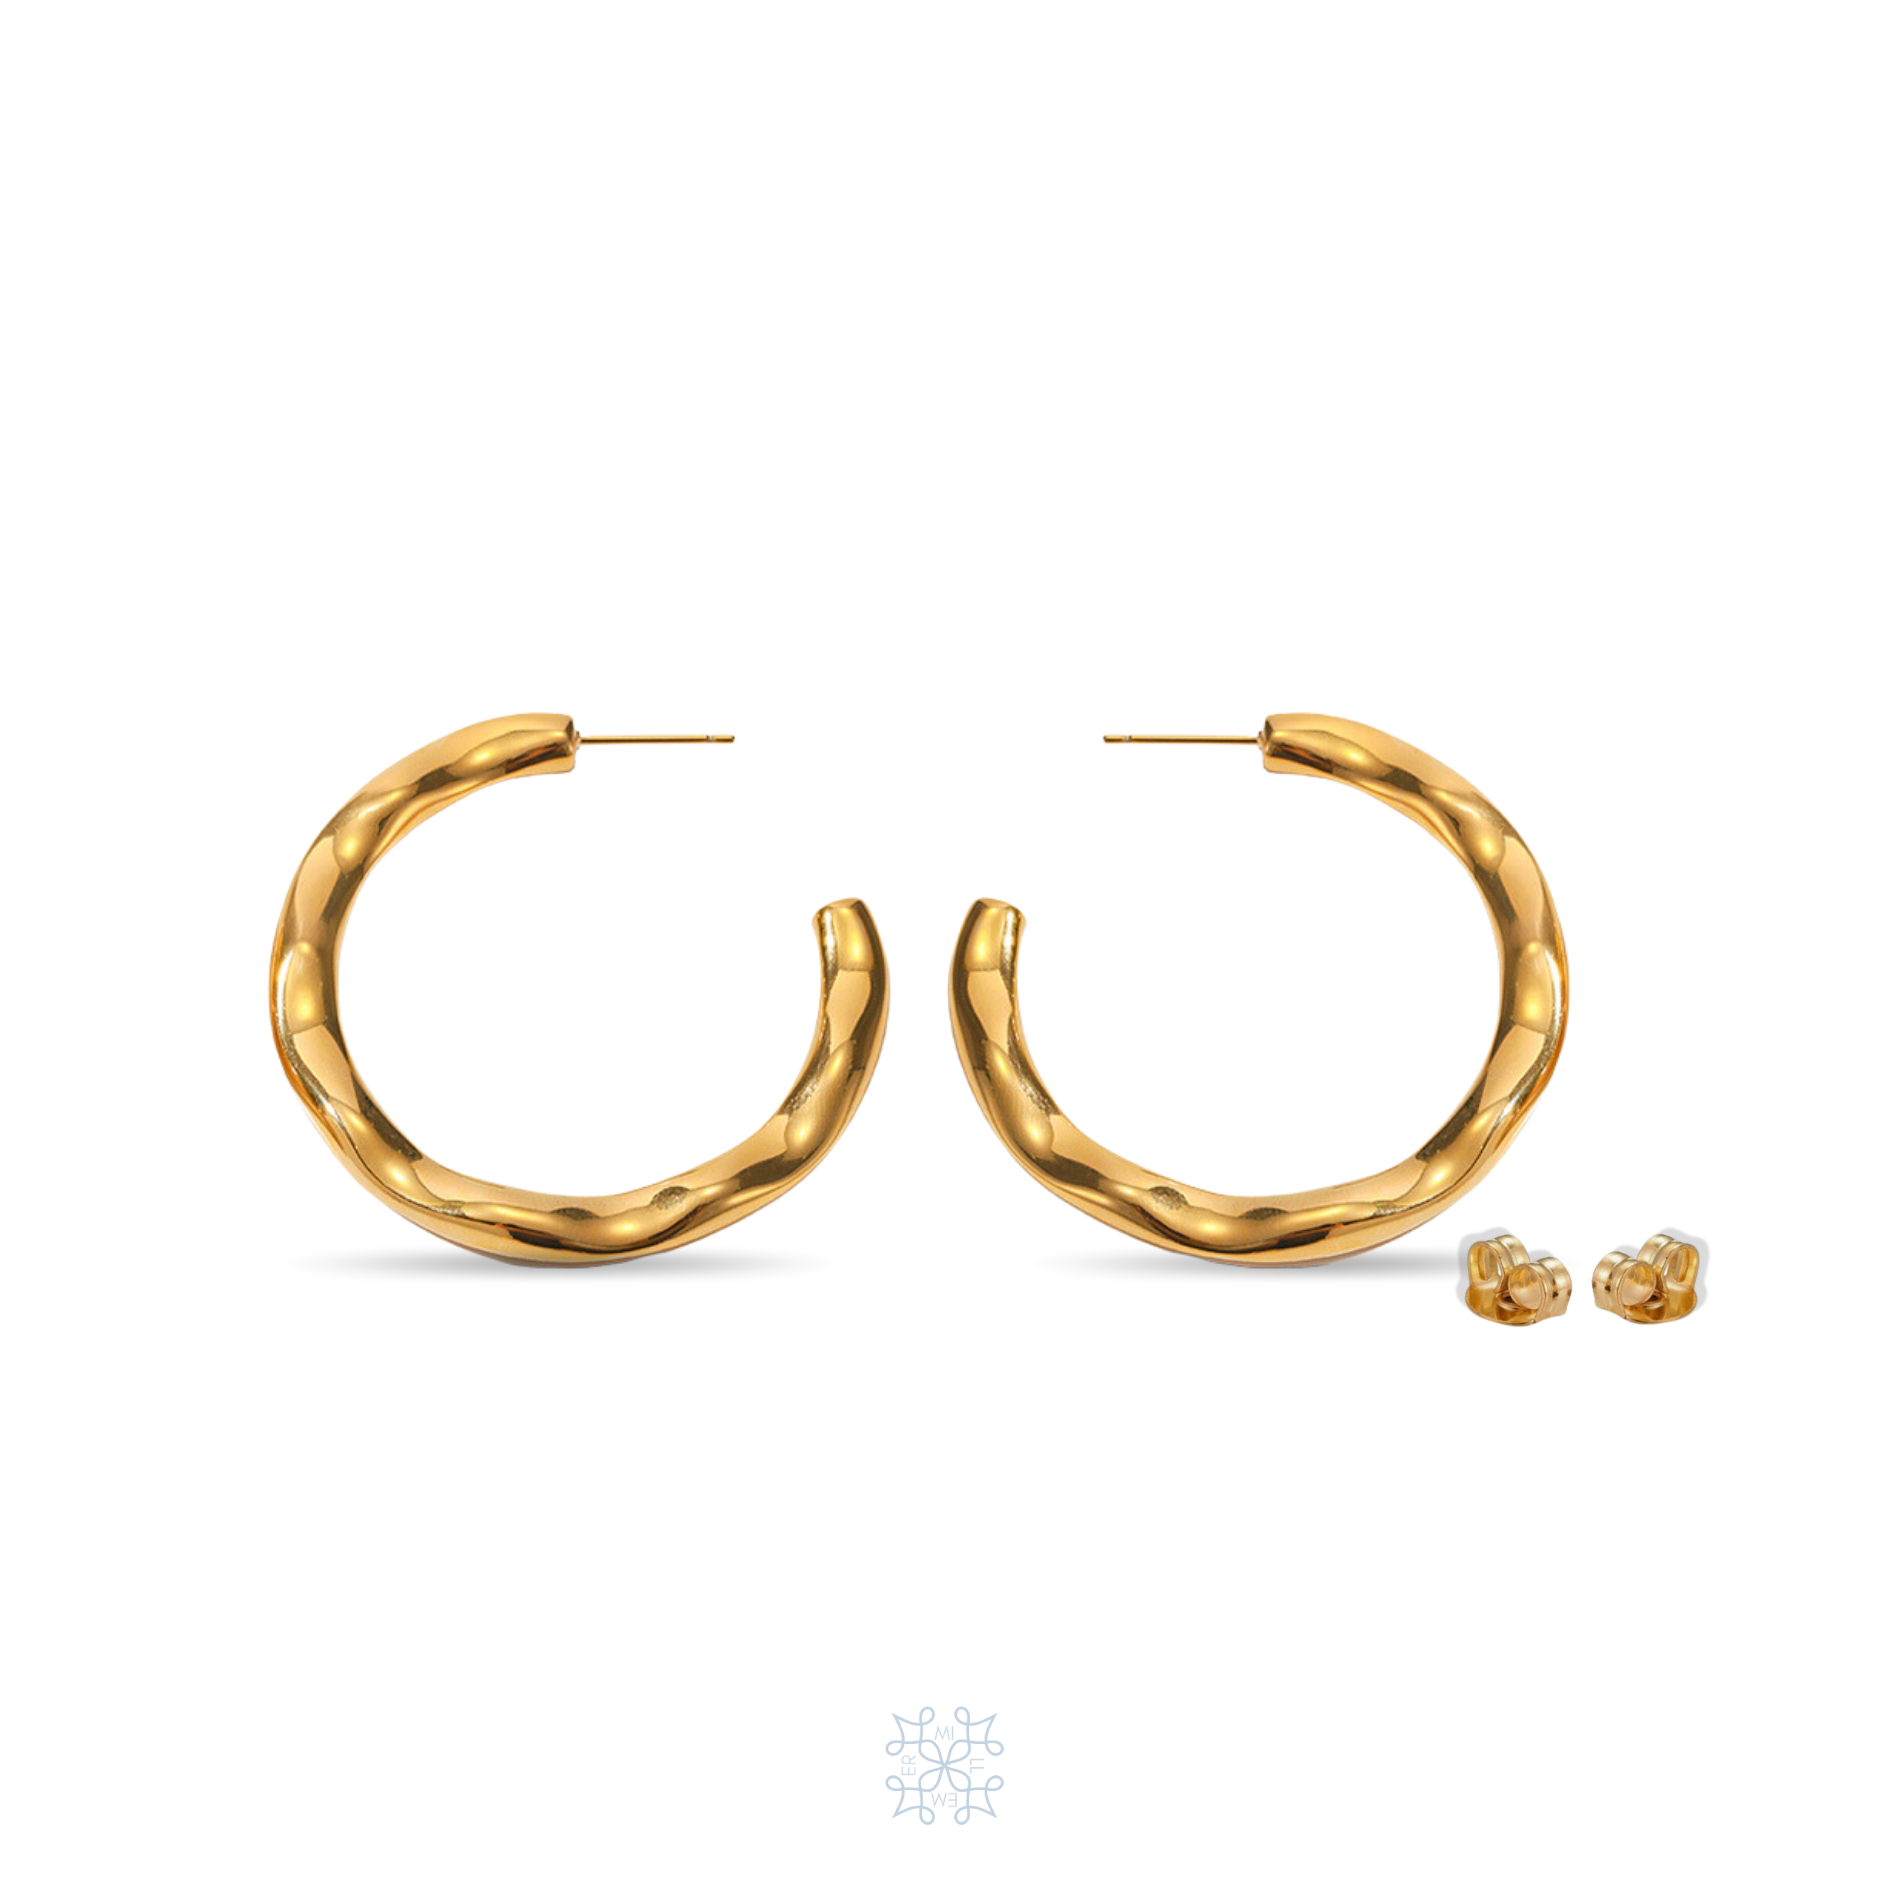 Gold hoop earrings with irregular surface. Big size of gold round earrings. Irregular surface.